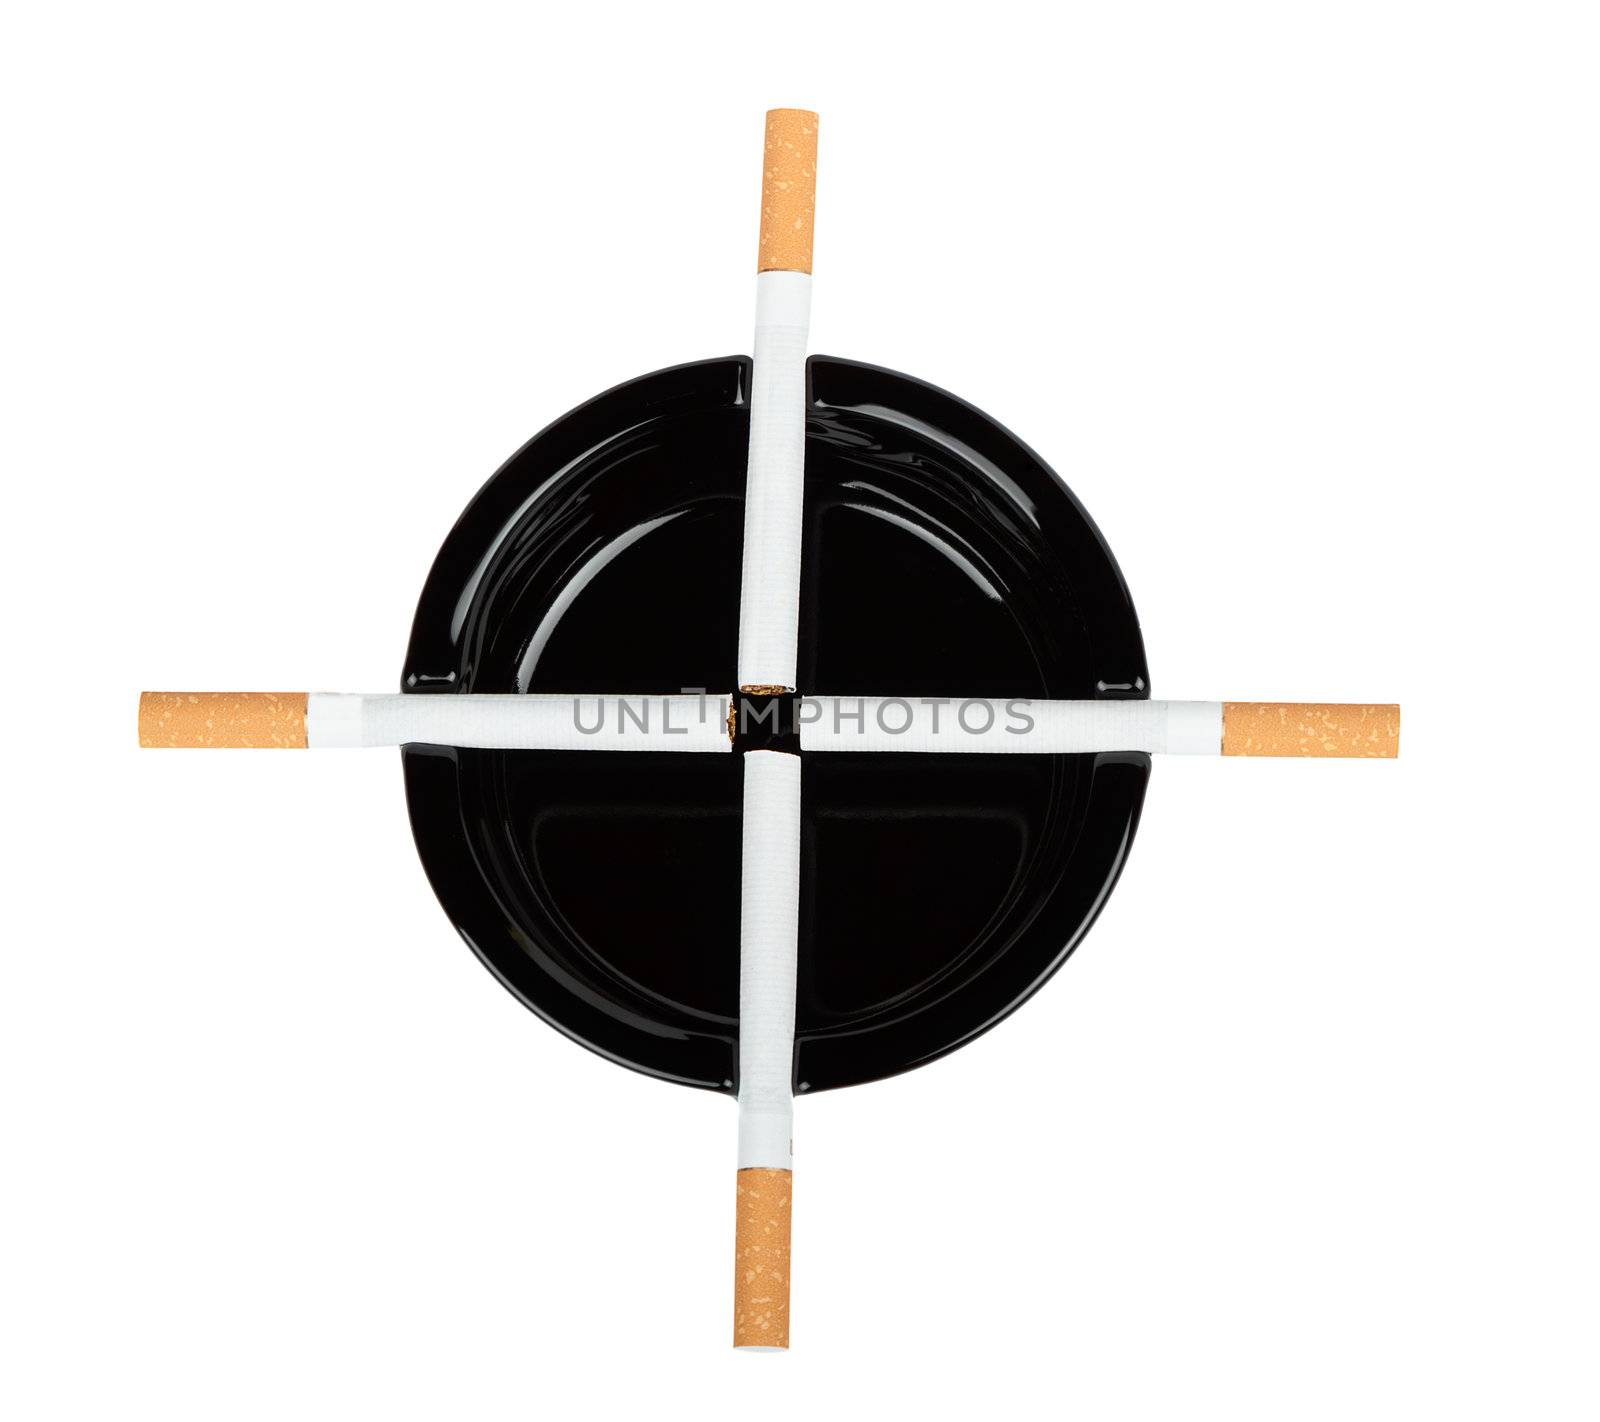 Cigarettes are a black ashtray on a white background